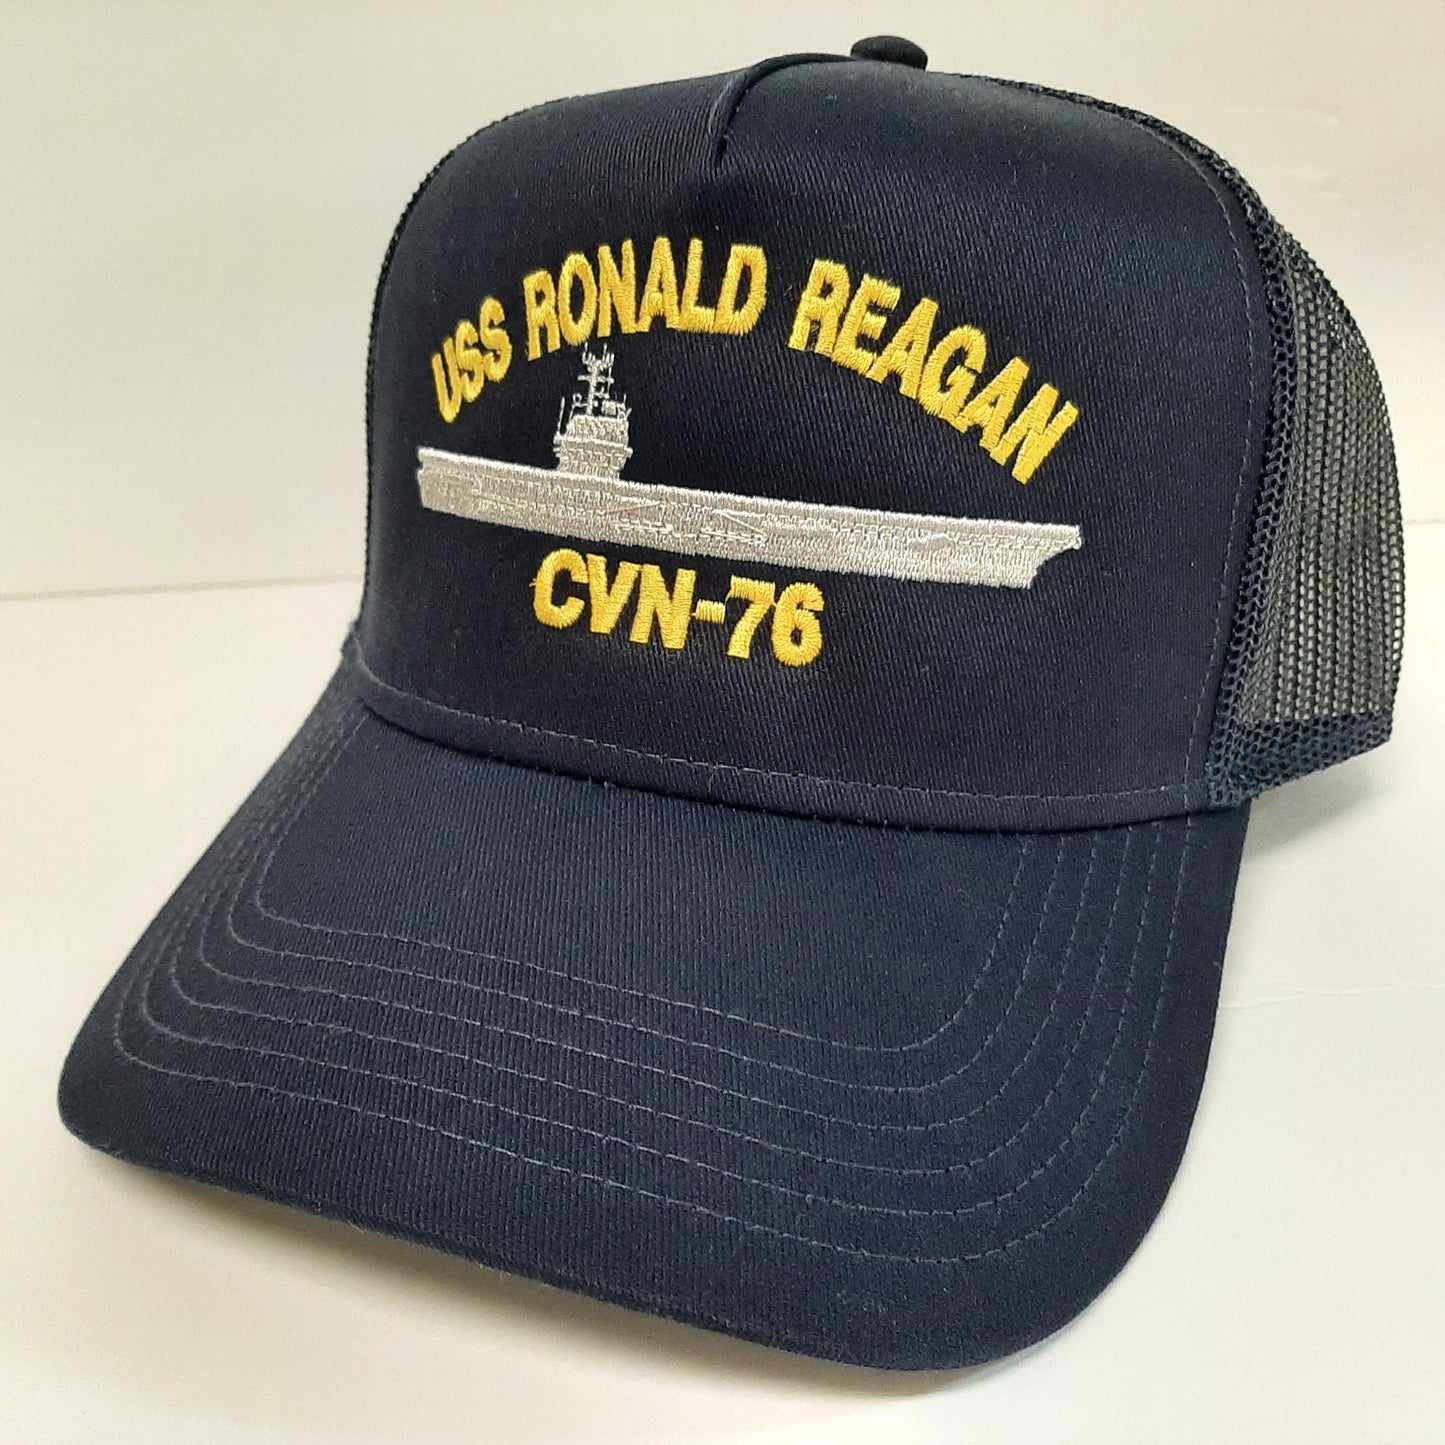 USS Ronald Reagan CVN-76 U.S Navy Ship Boat Hat Cap Mesh Snapback Blue Curved